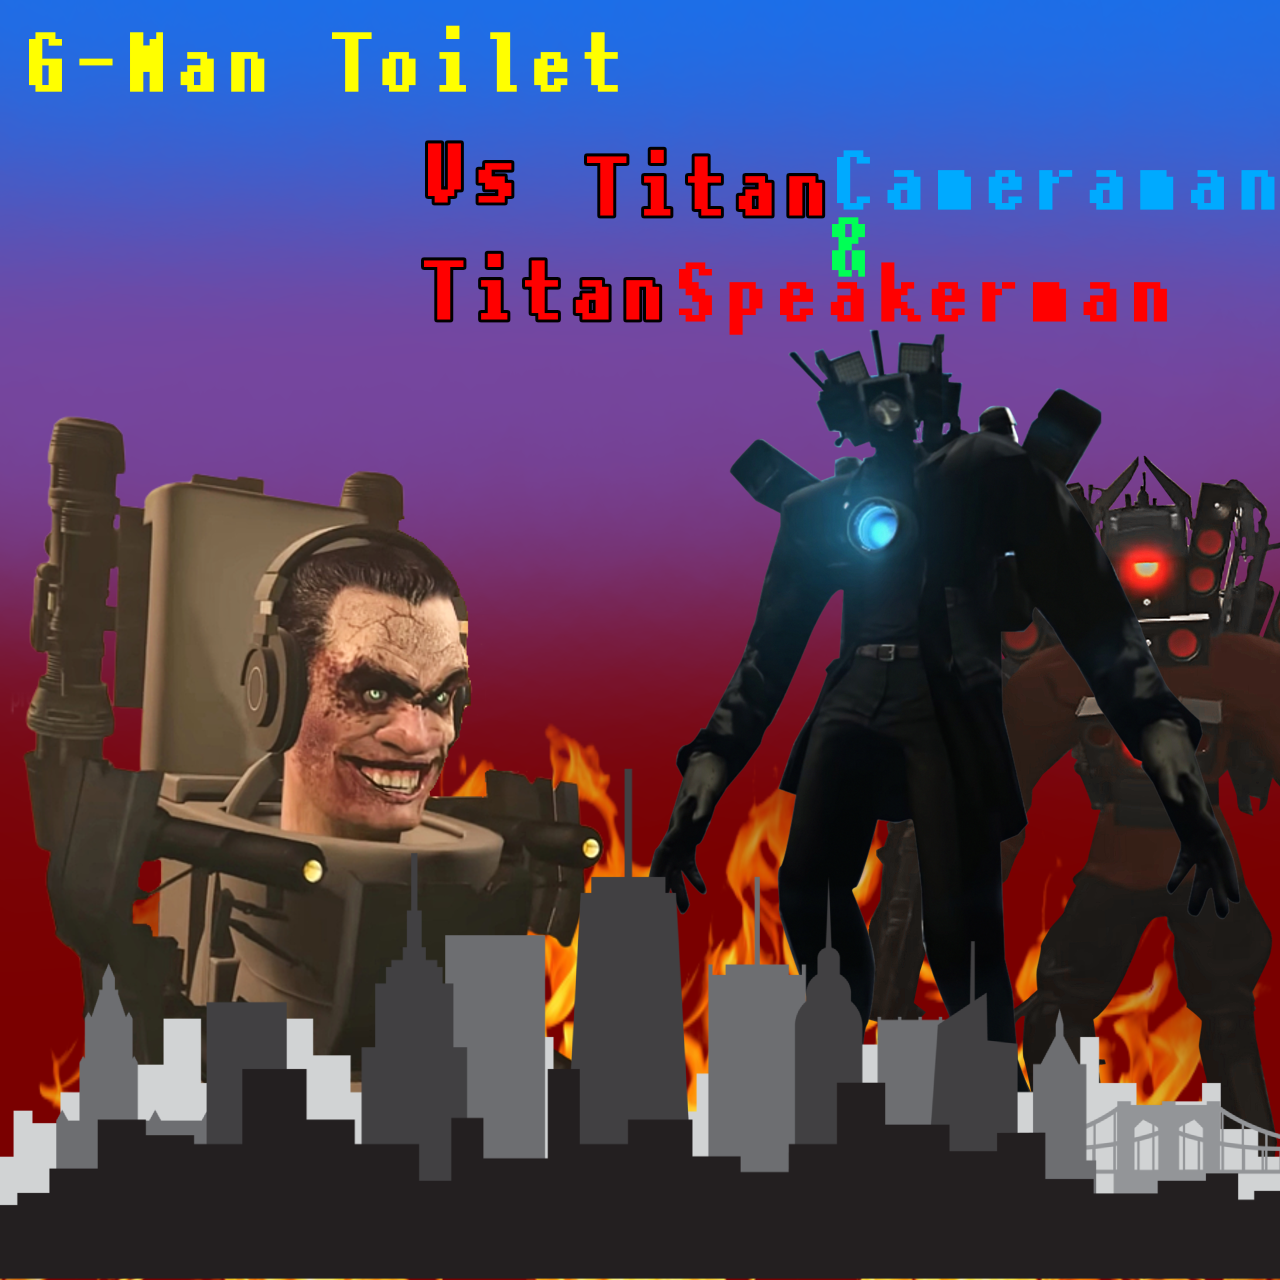 If Cinemaman and Titan cameraman beat G-man Toilet - Comic Studio